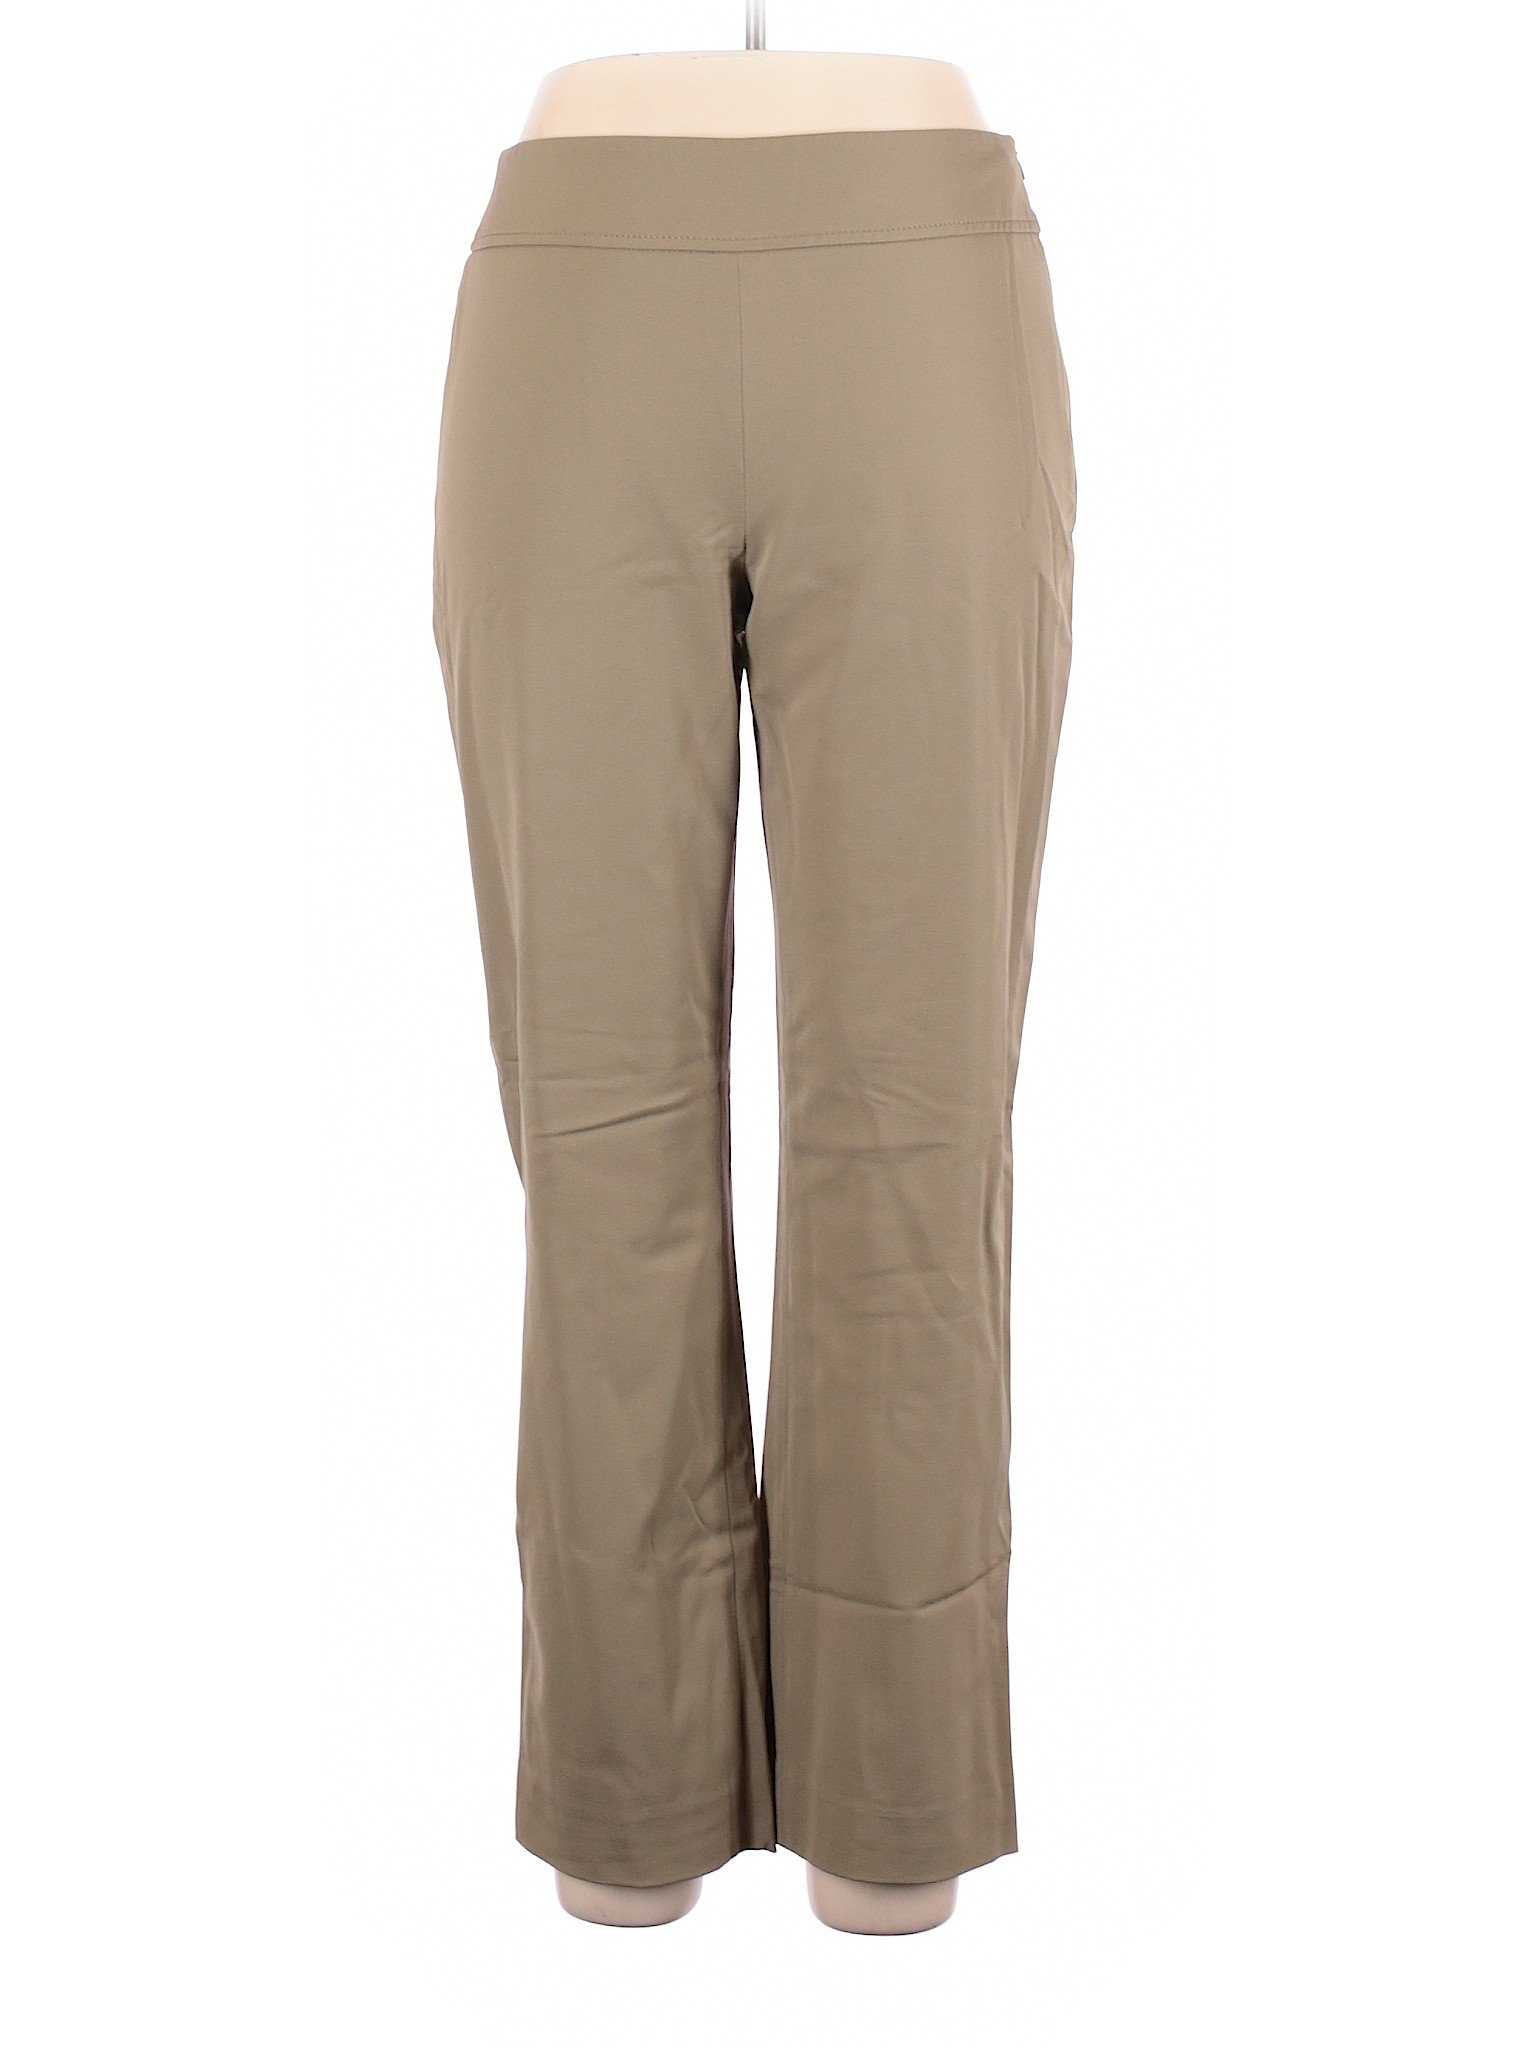 Assorted Brands Women Brown Casual Pants 10 | eBay